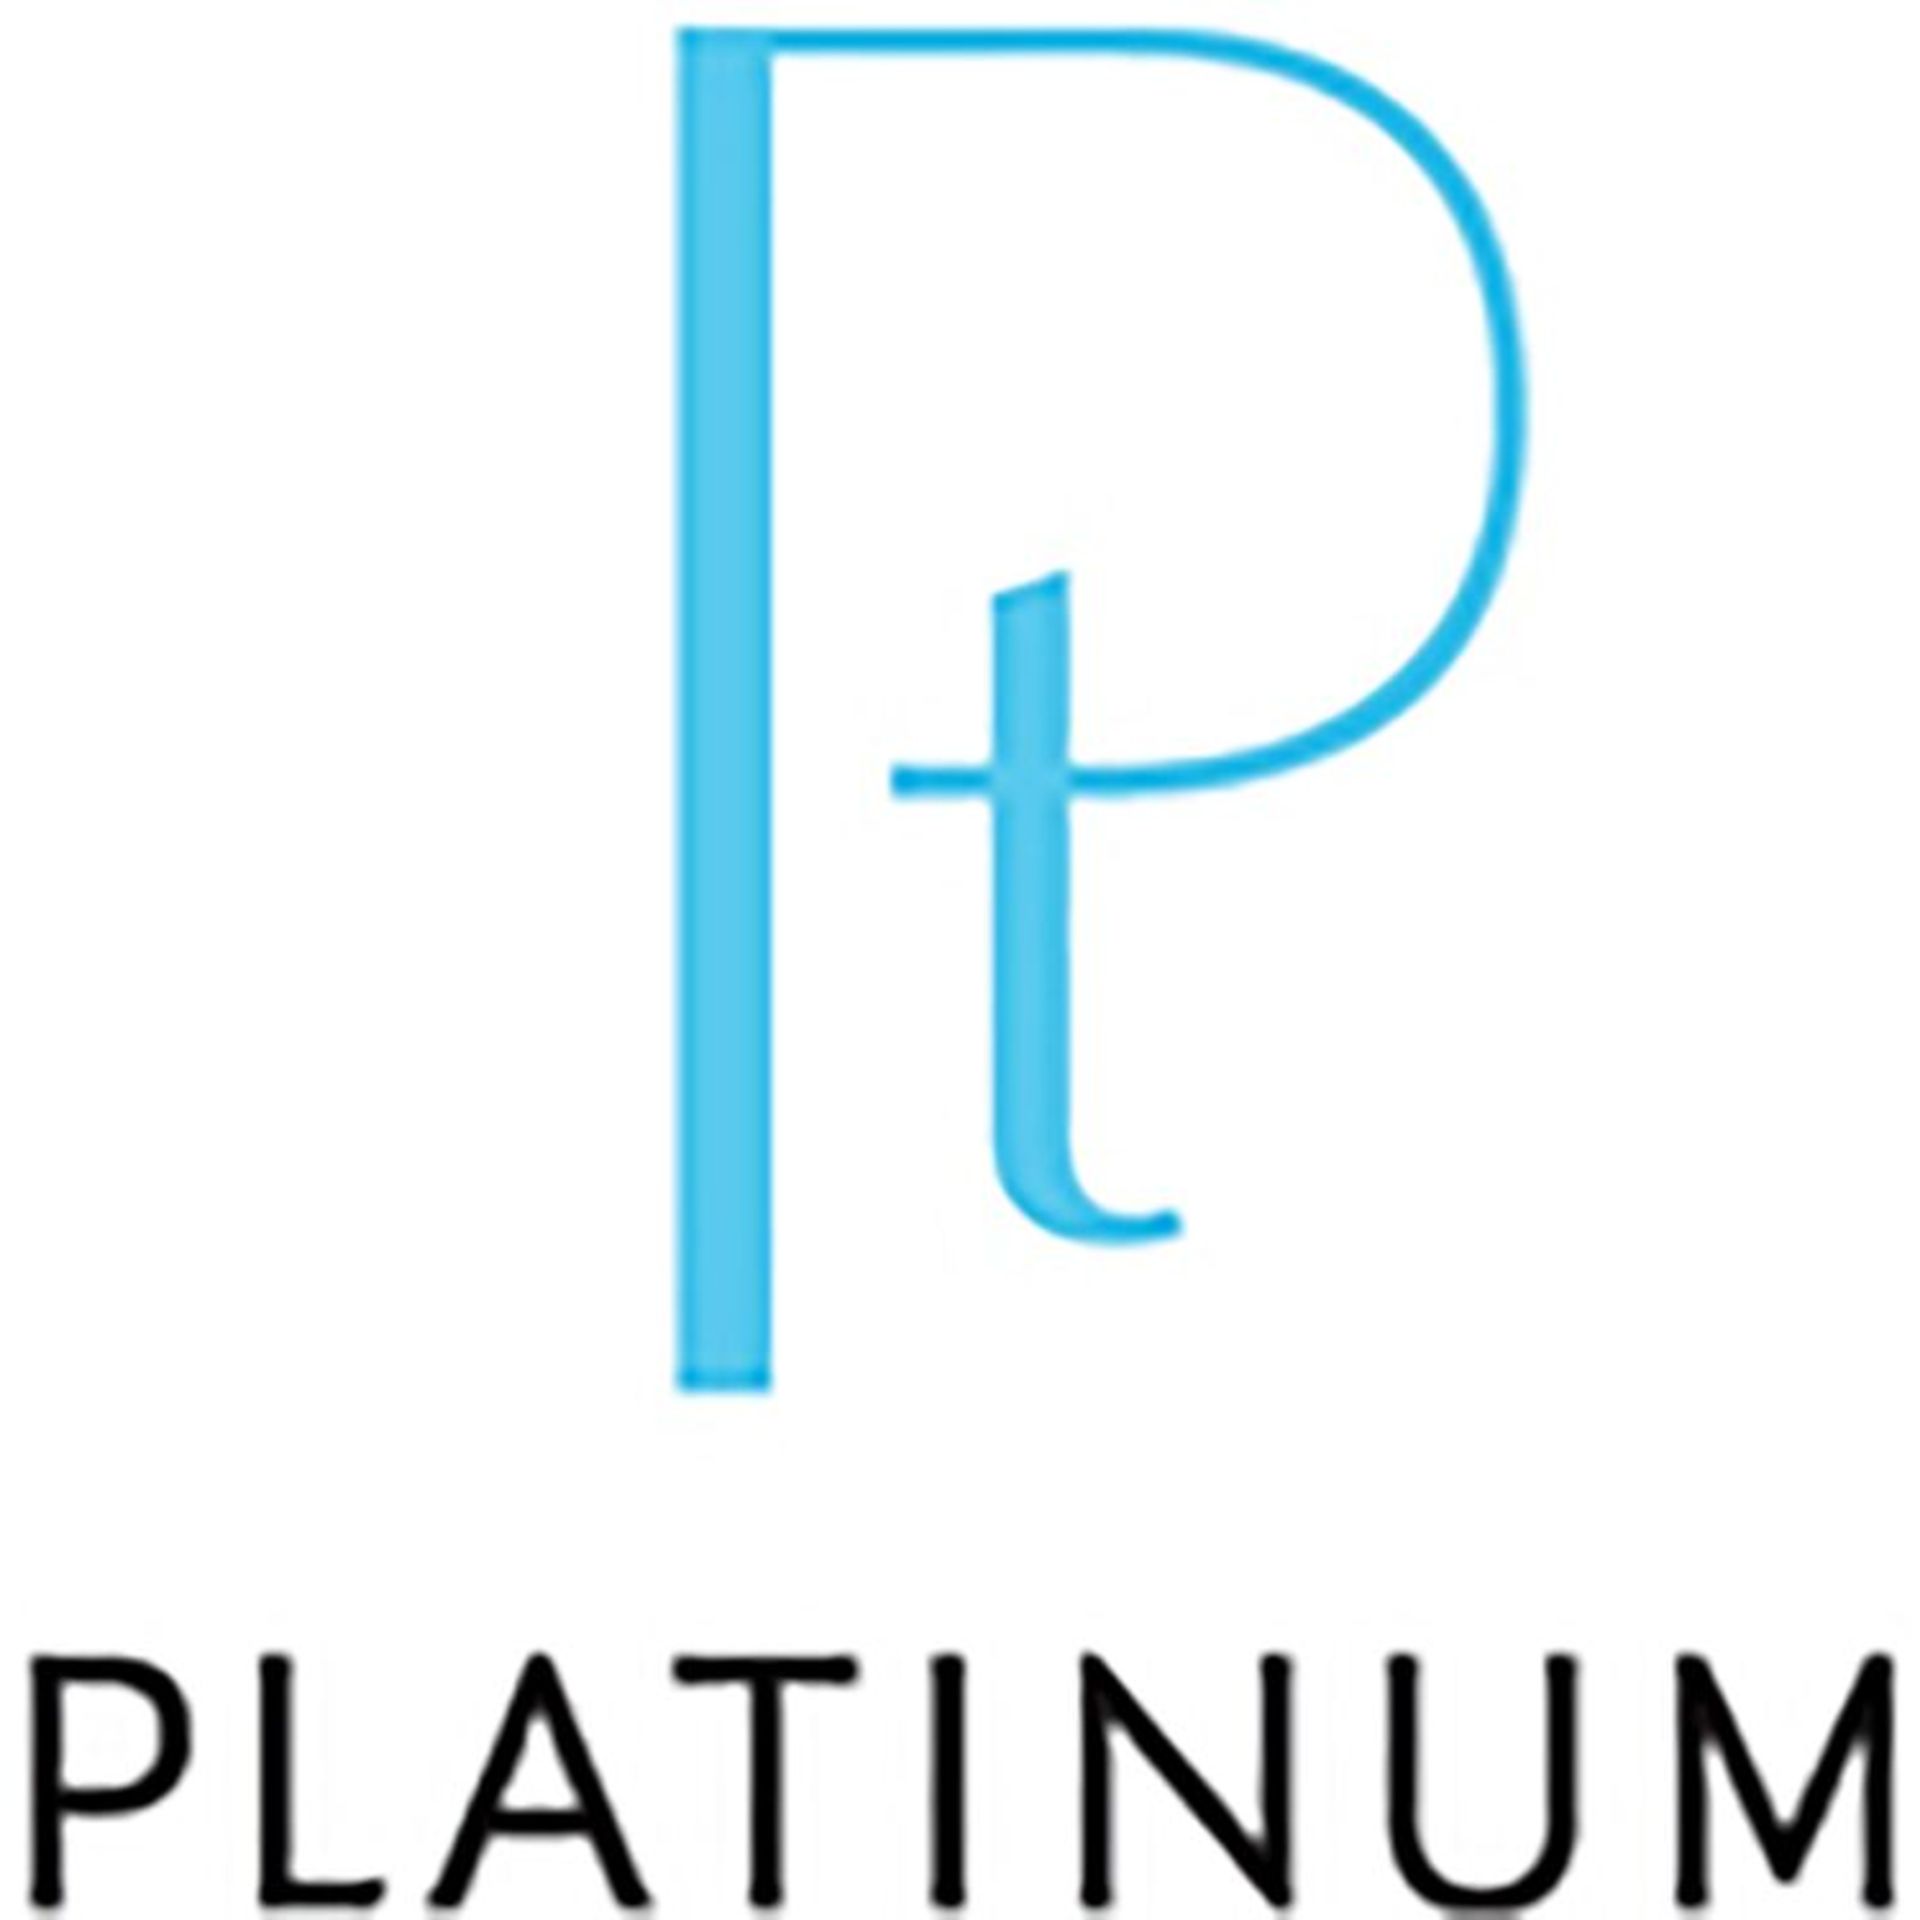 Amethyst Earrings in Platinum, Metal Platinum 900, Weight (g) 0.59, Diamond Weight (ct) 0.2, - Image 3 of 3